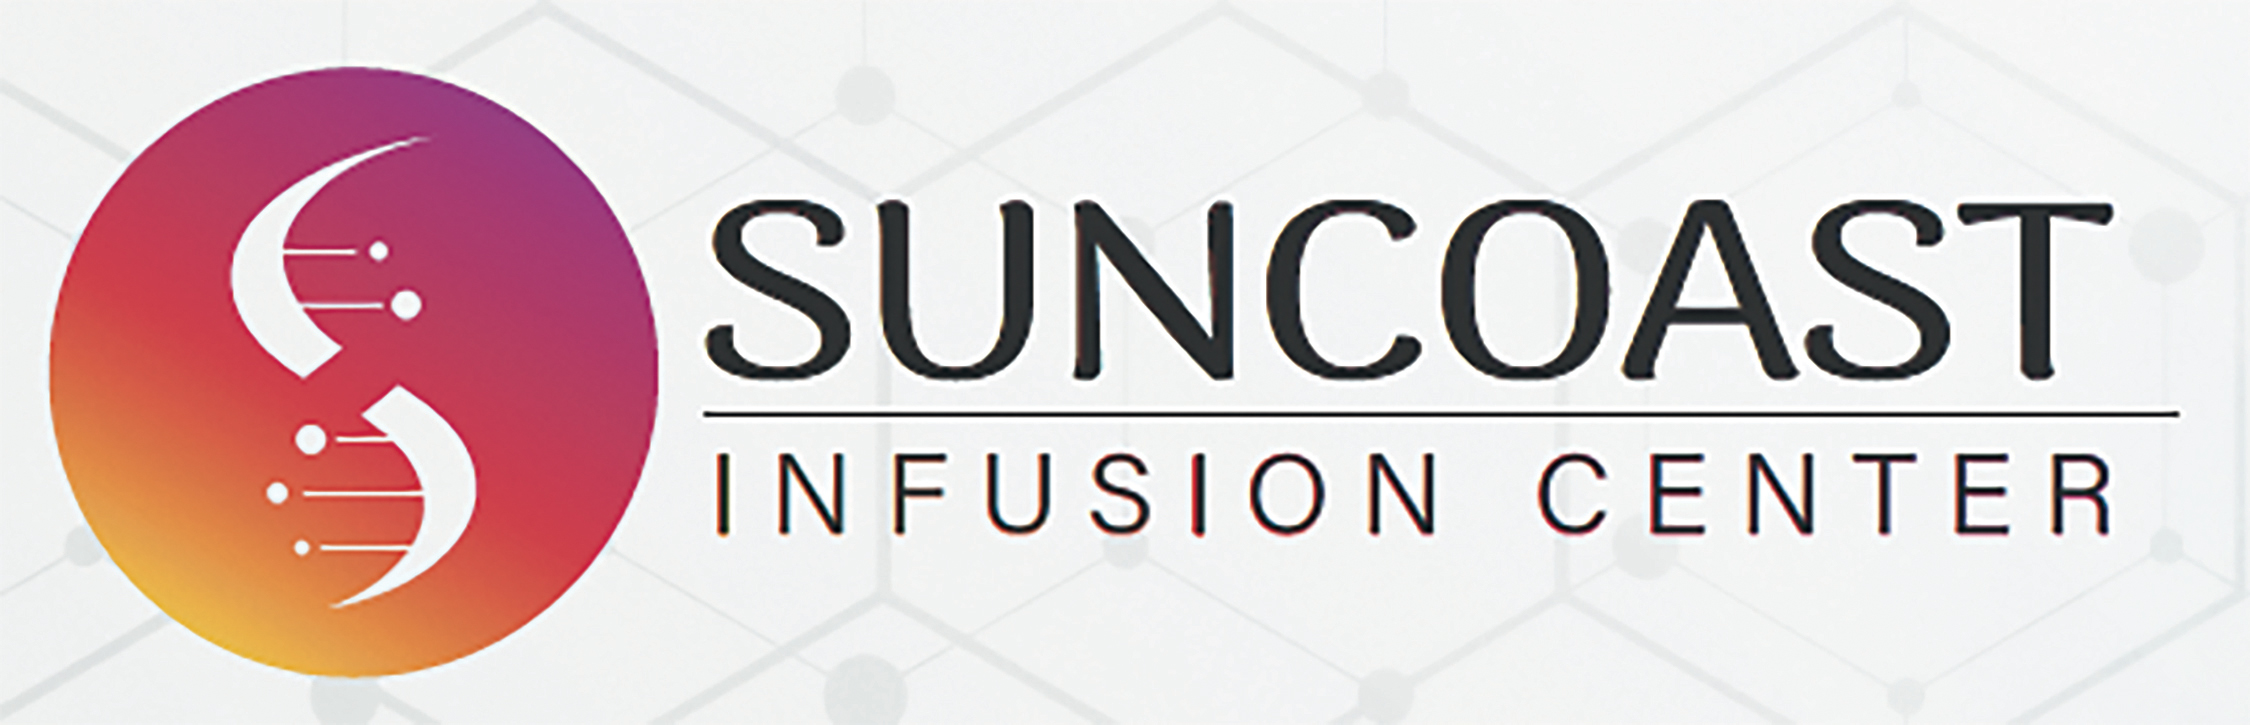 Suncoast Infusion Center (1)